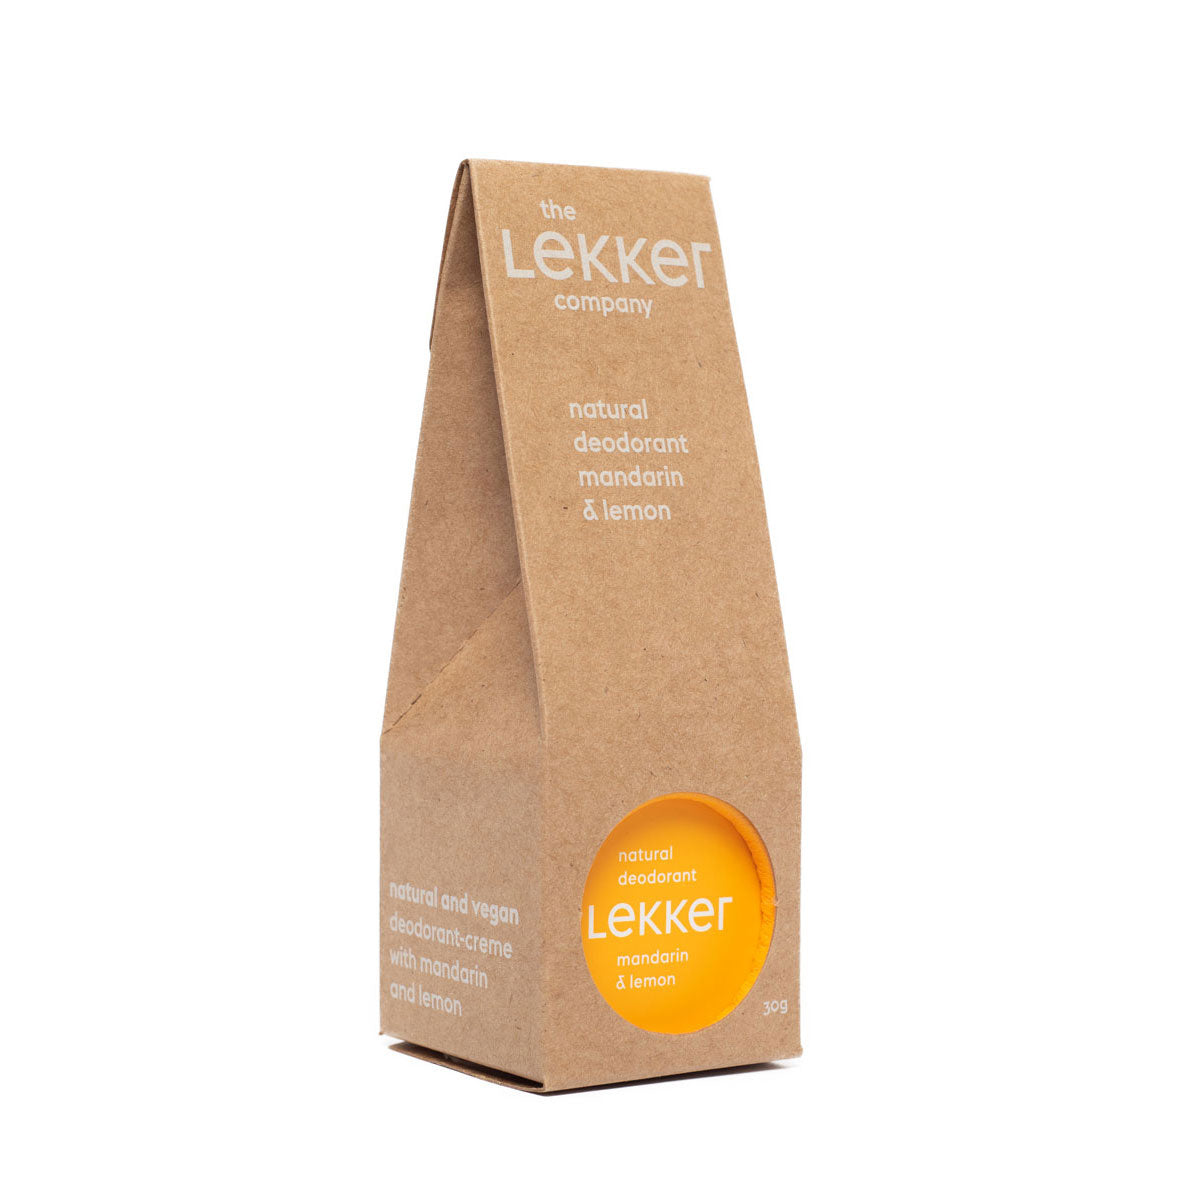 The Lekker Company Natural Deodorant Mandarin and Lemon with Packaging